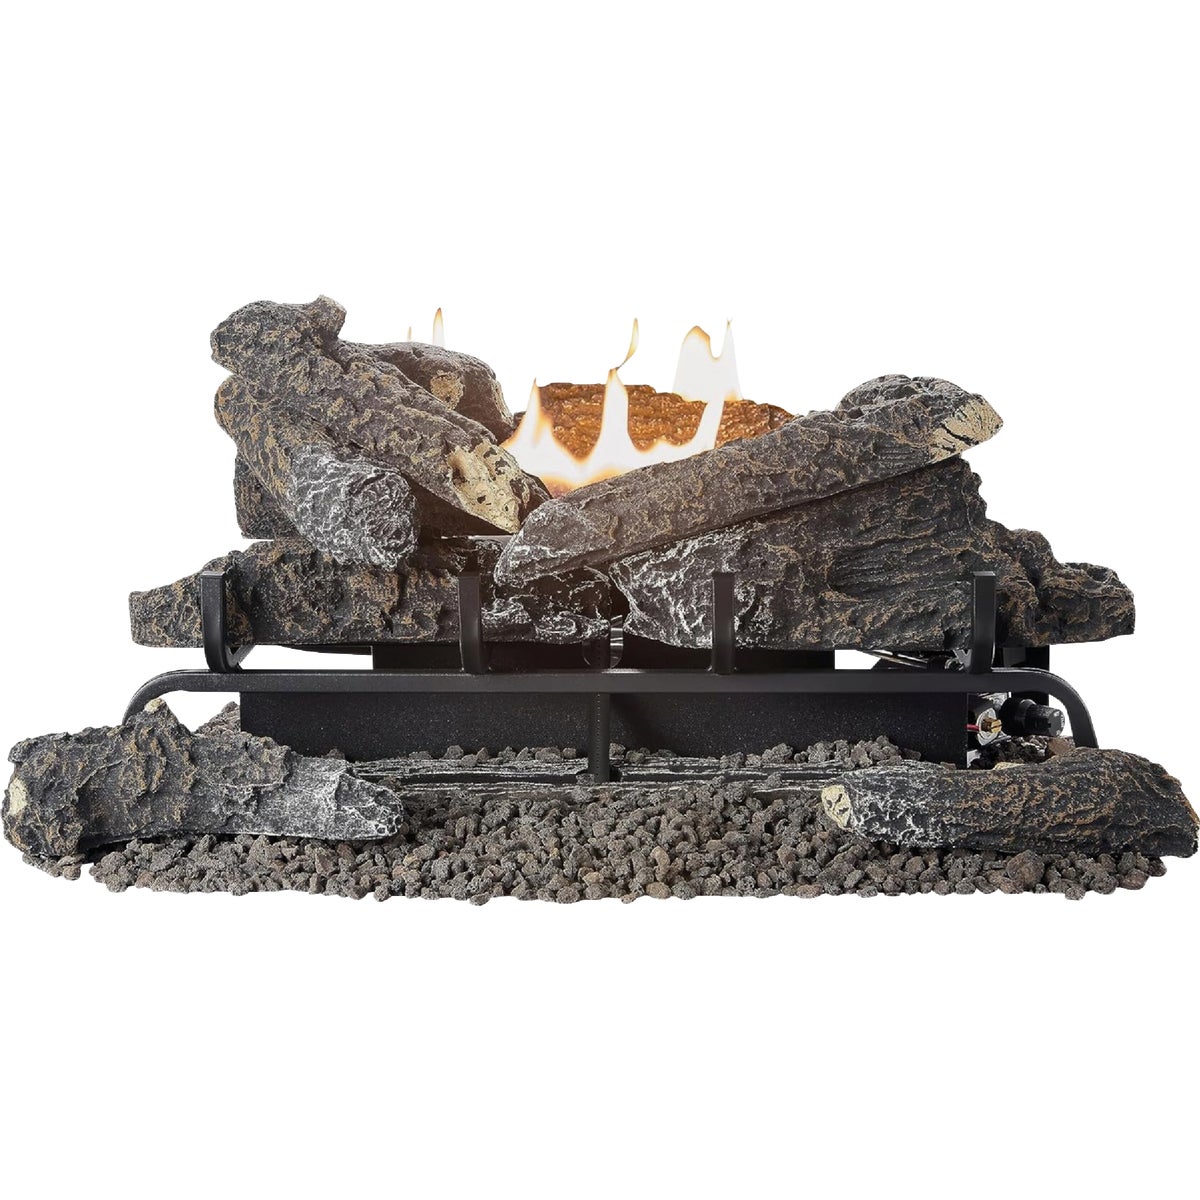 Item 461016, The beautifully crafted, deep textured charred look, split oak cast log set